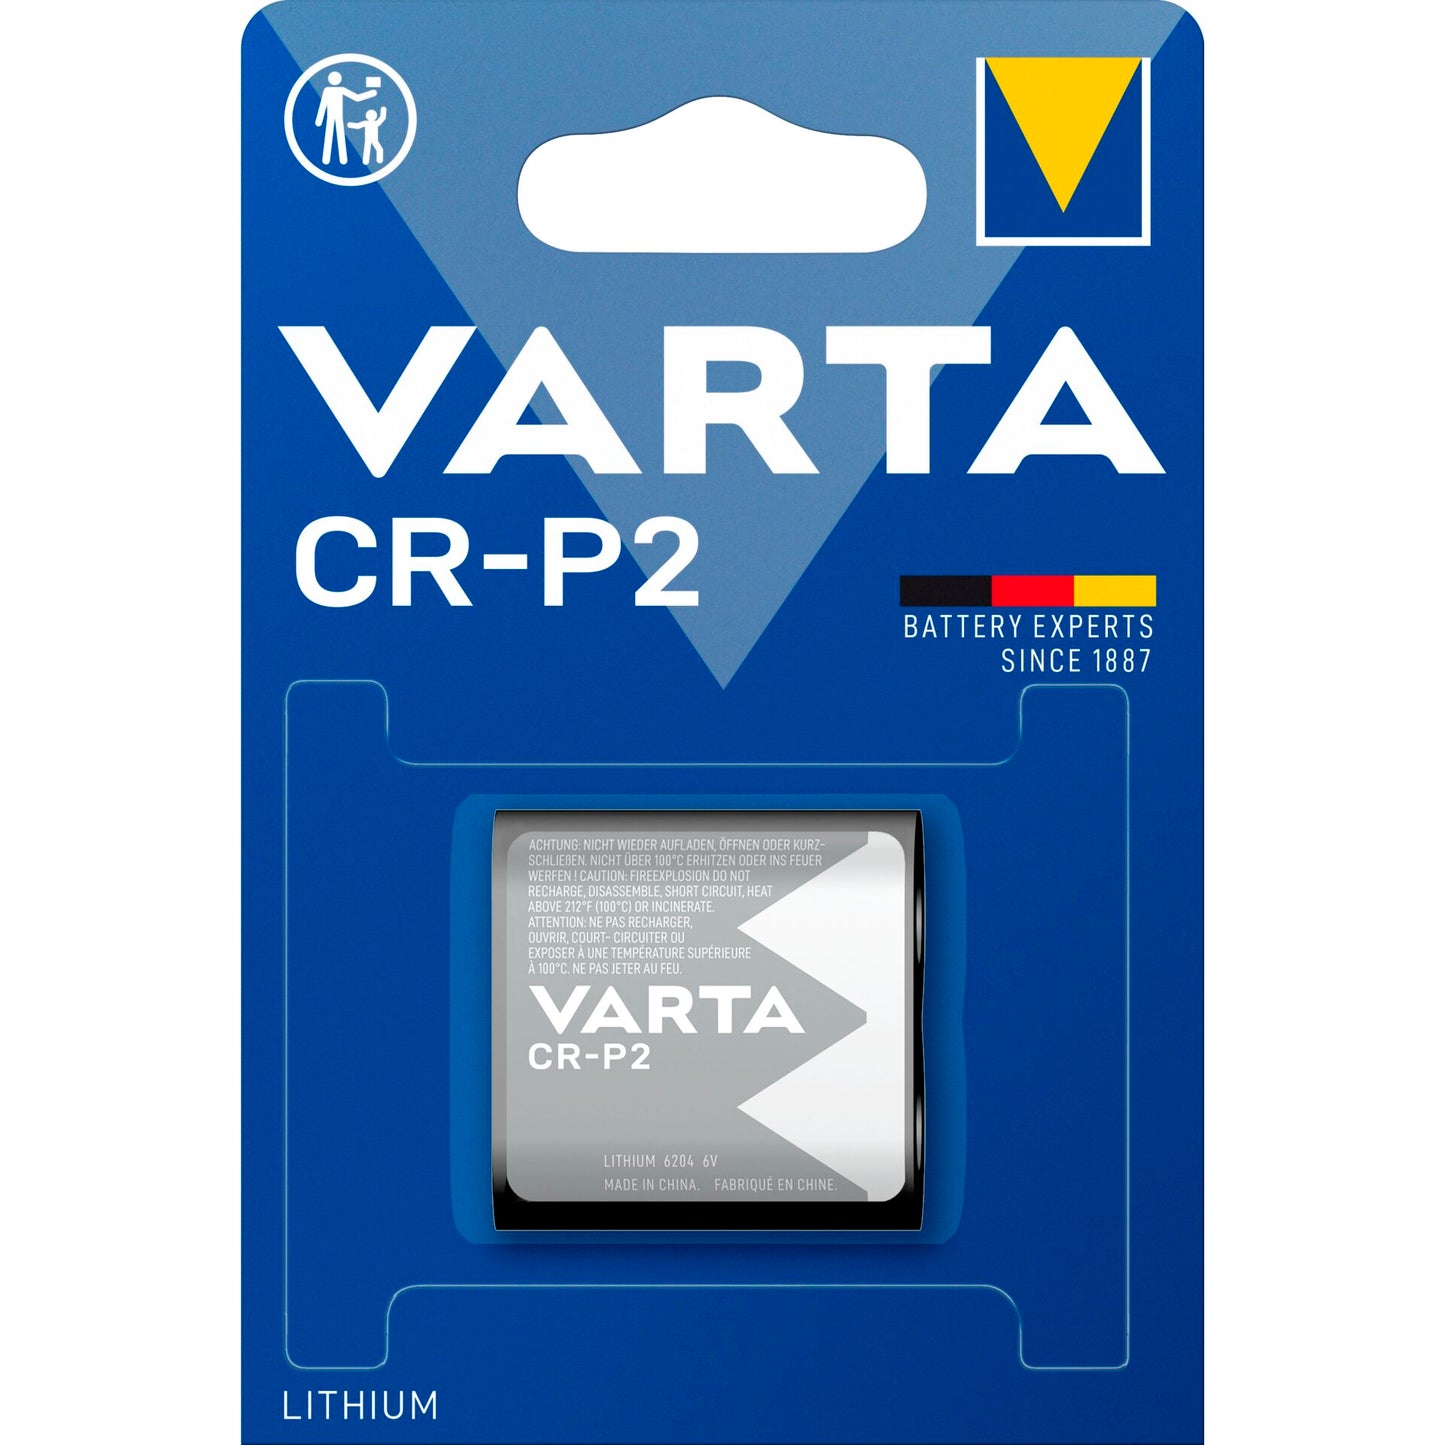 Varta CRP2 6V Lithium Battery